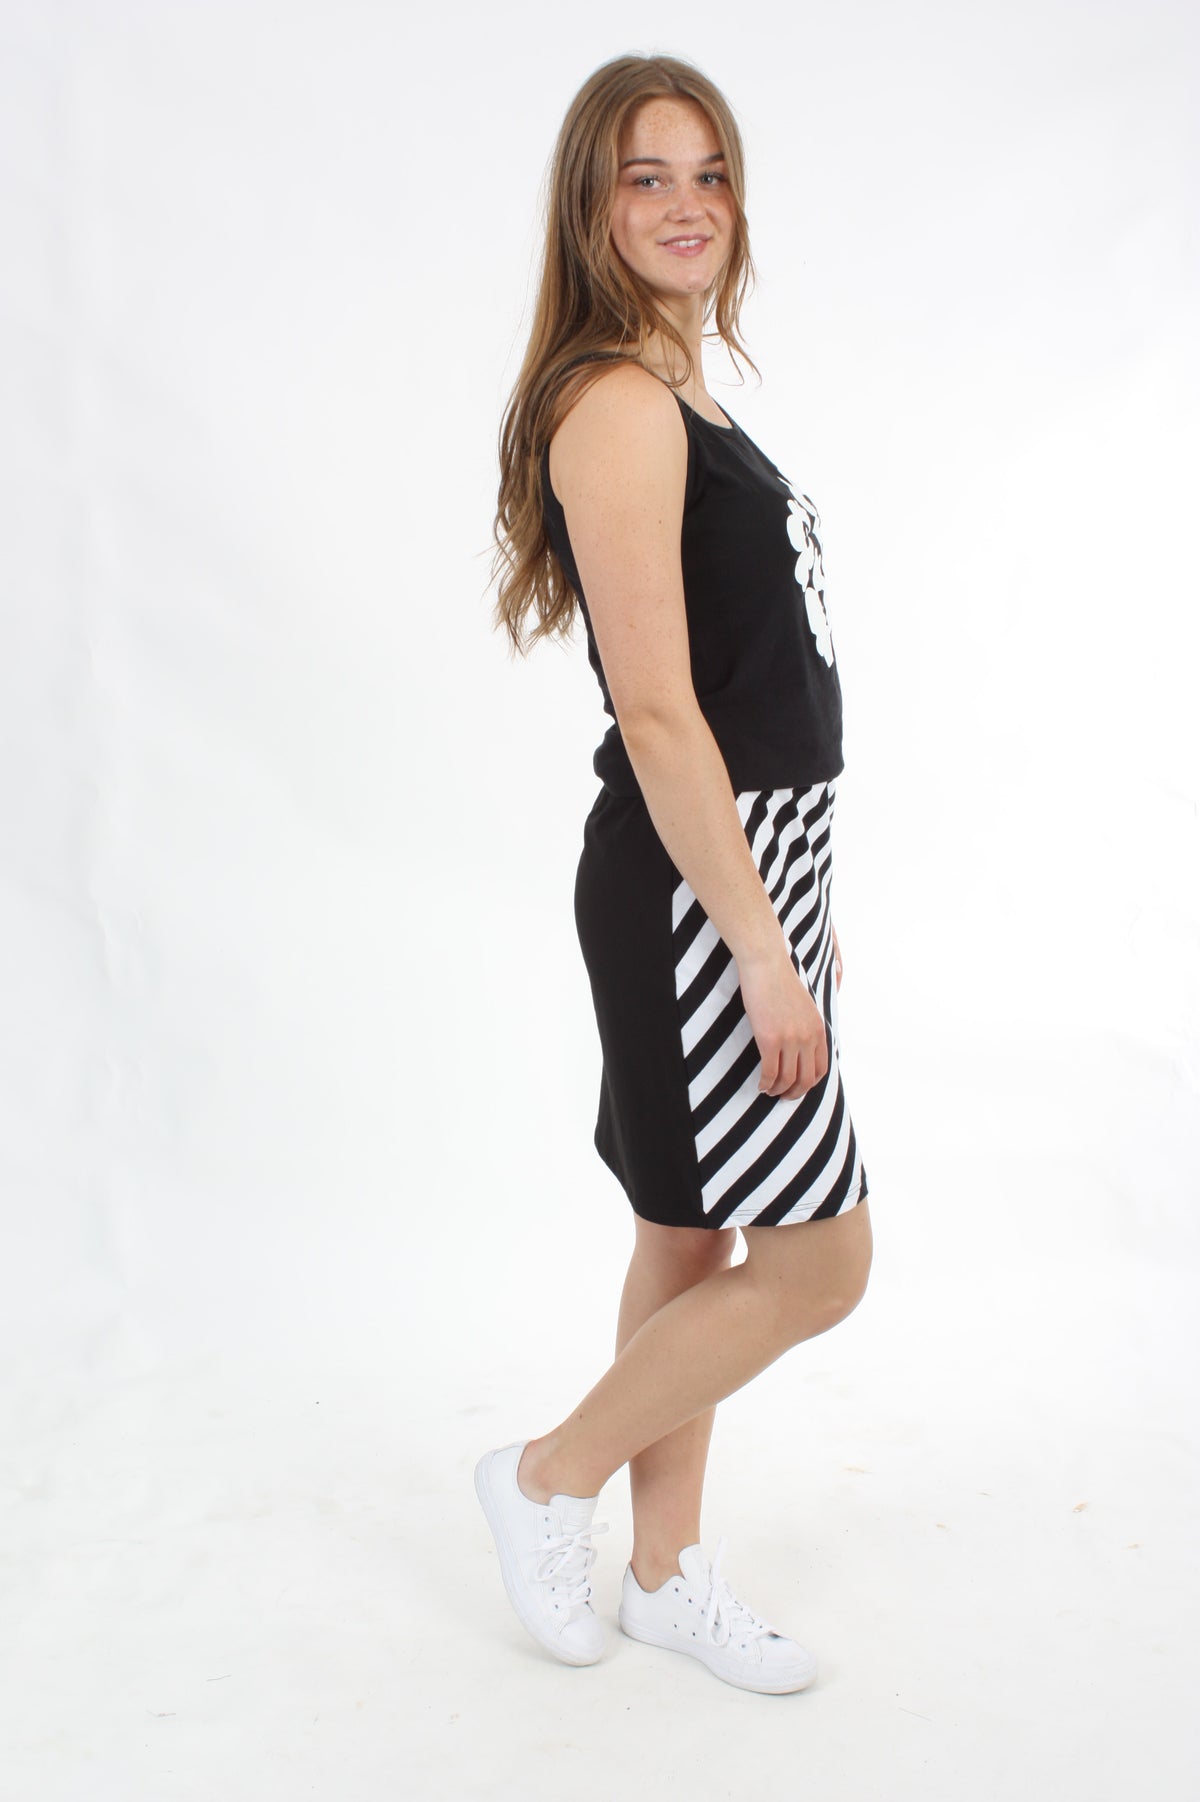 Diagonal Skirt - Black and White